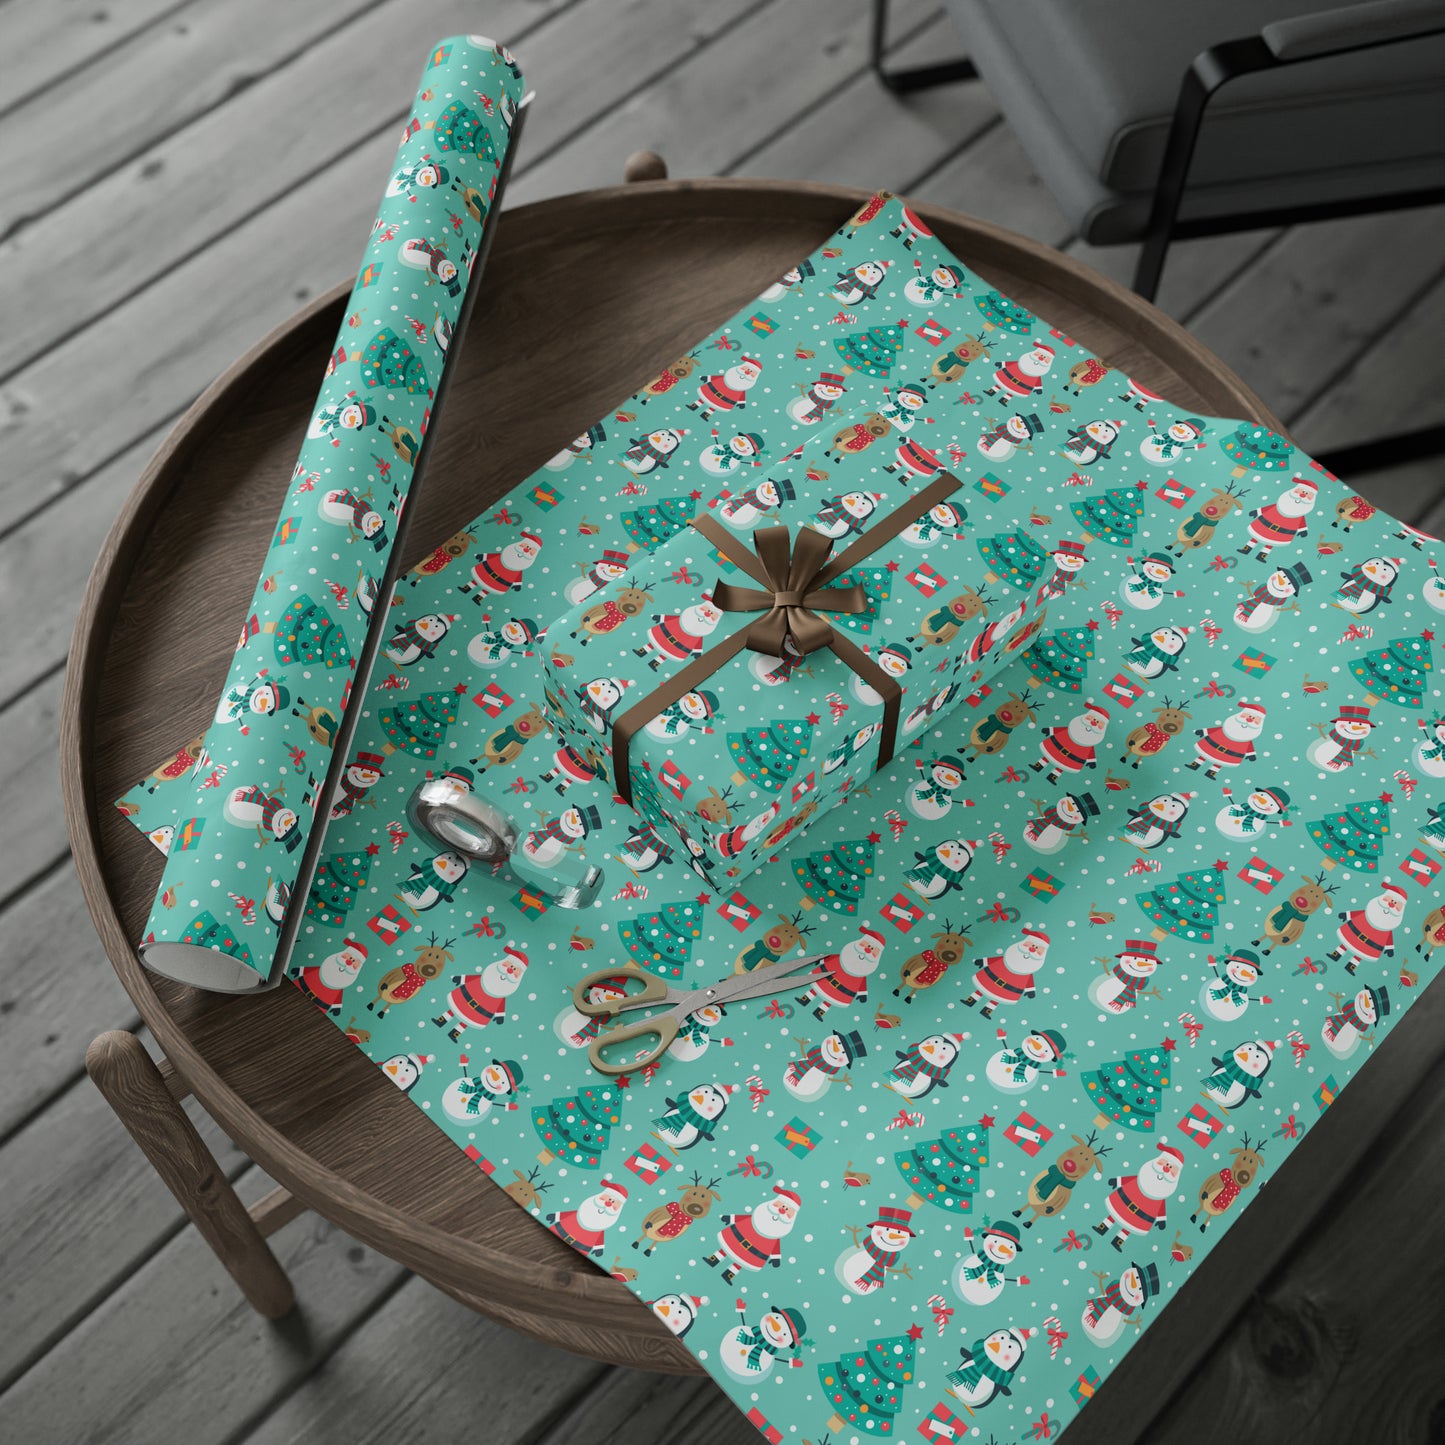 Santa and Reindeers Gift Wrap Paper